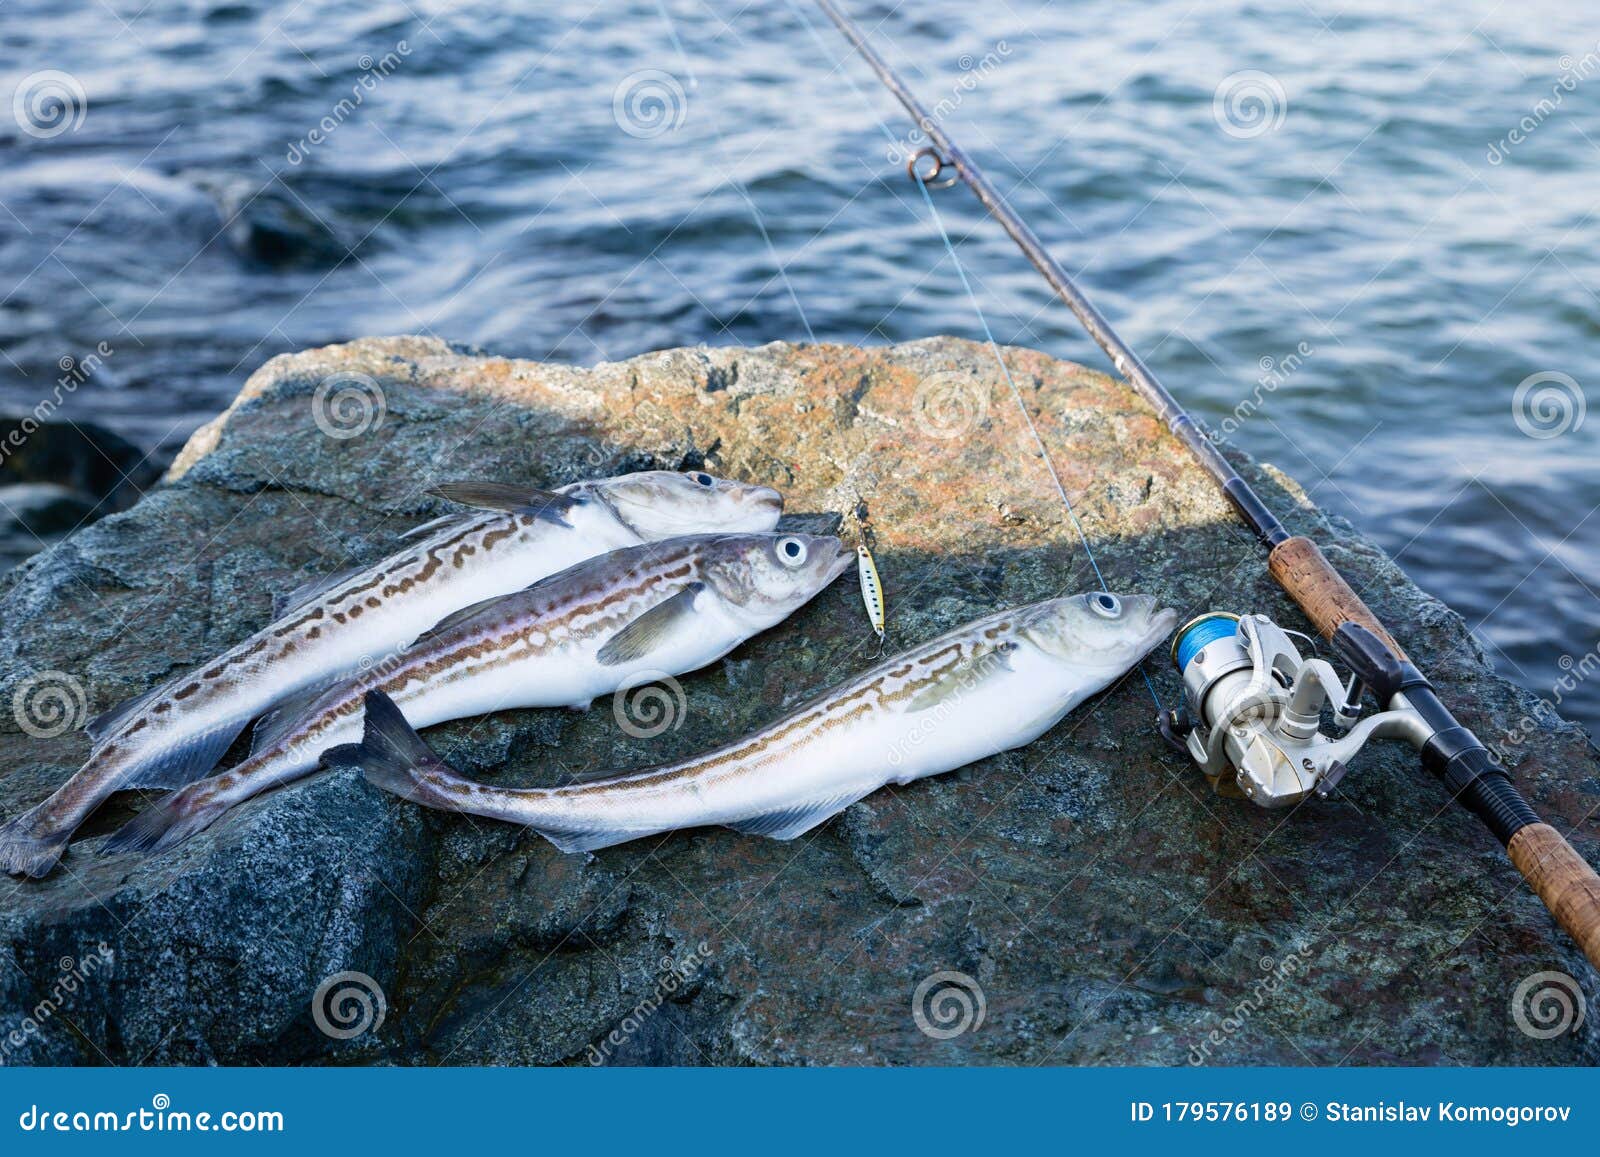 Caught Pollock Fish and Fishing Rod Stock Image - Image of alaska, seafood:  179576189